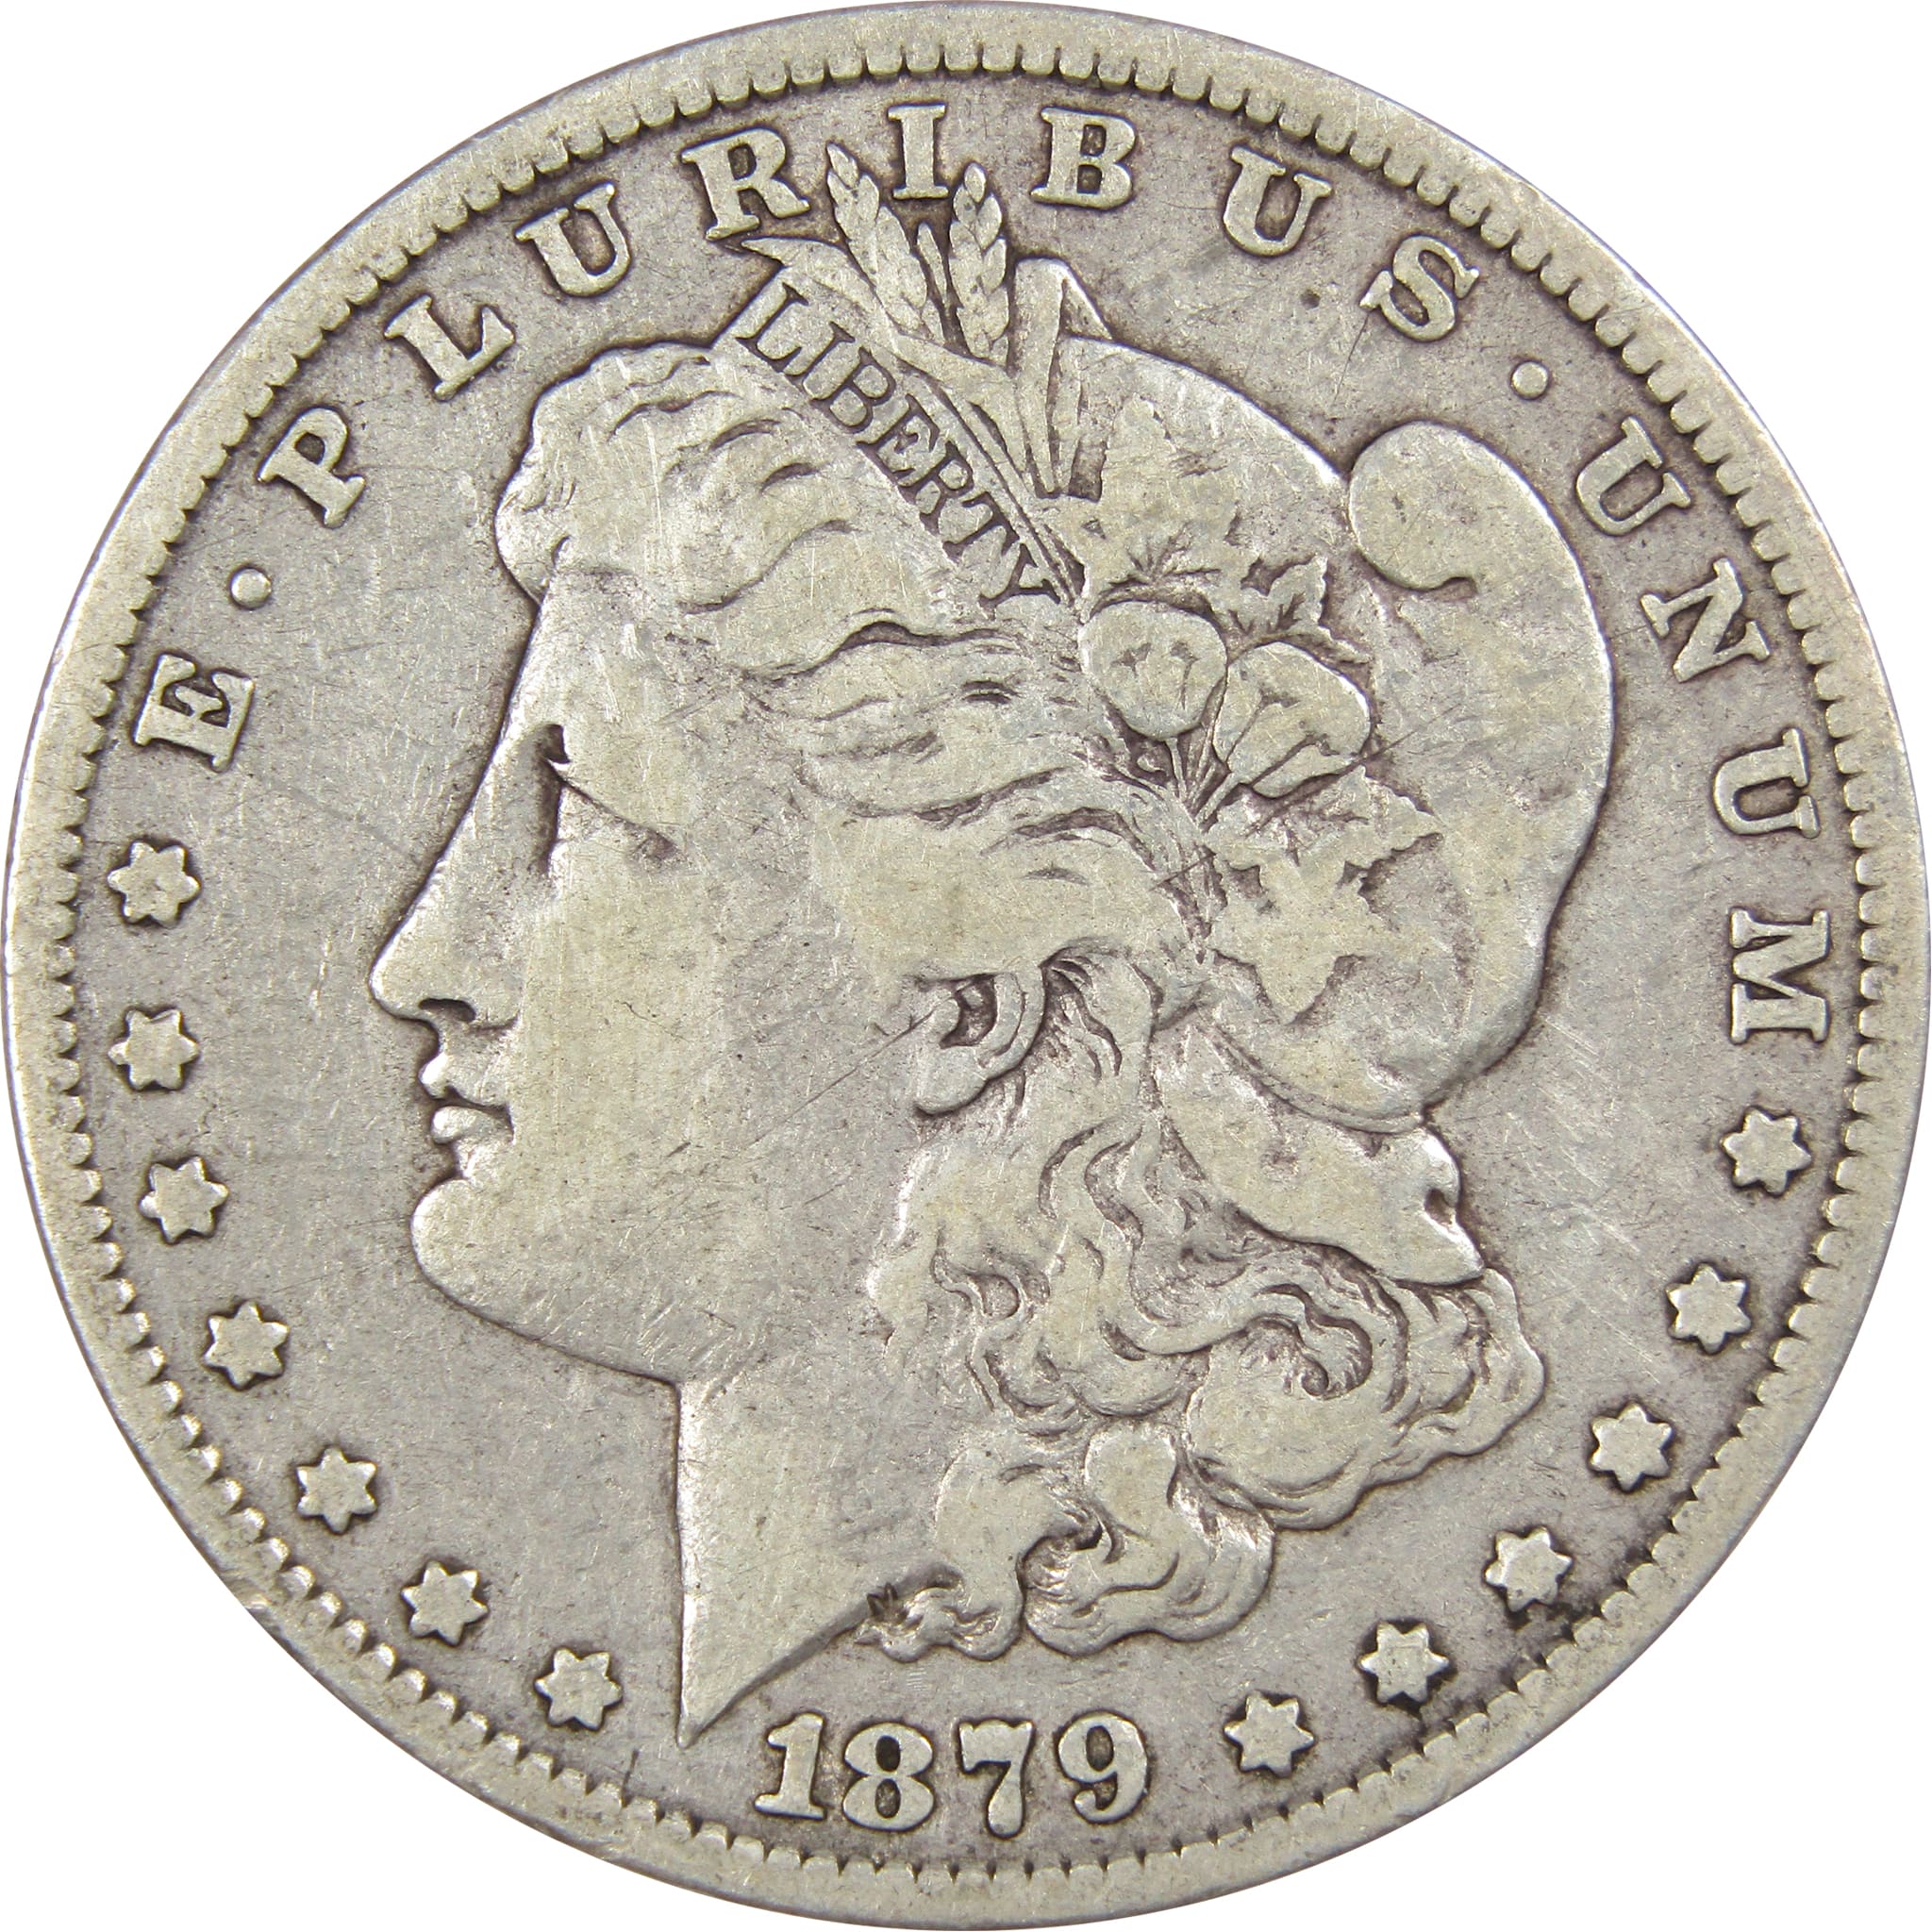 1879 Morgan Dollar F Fine 90% Silver US Coin SKU:IPC7465 - Morgan coin - Morgan silver dollar - Morgan silver dollar for sale - Profile Coins &amp; Collectibles